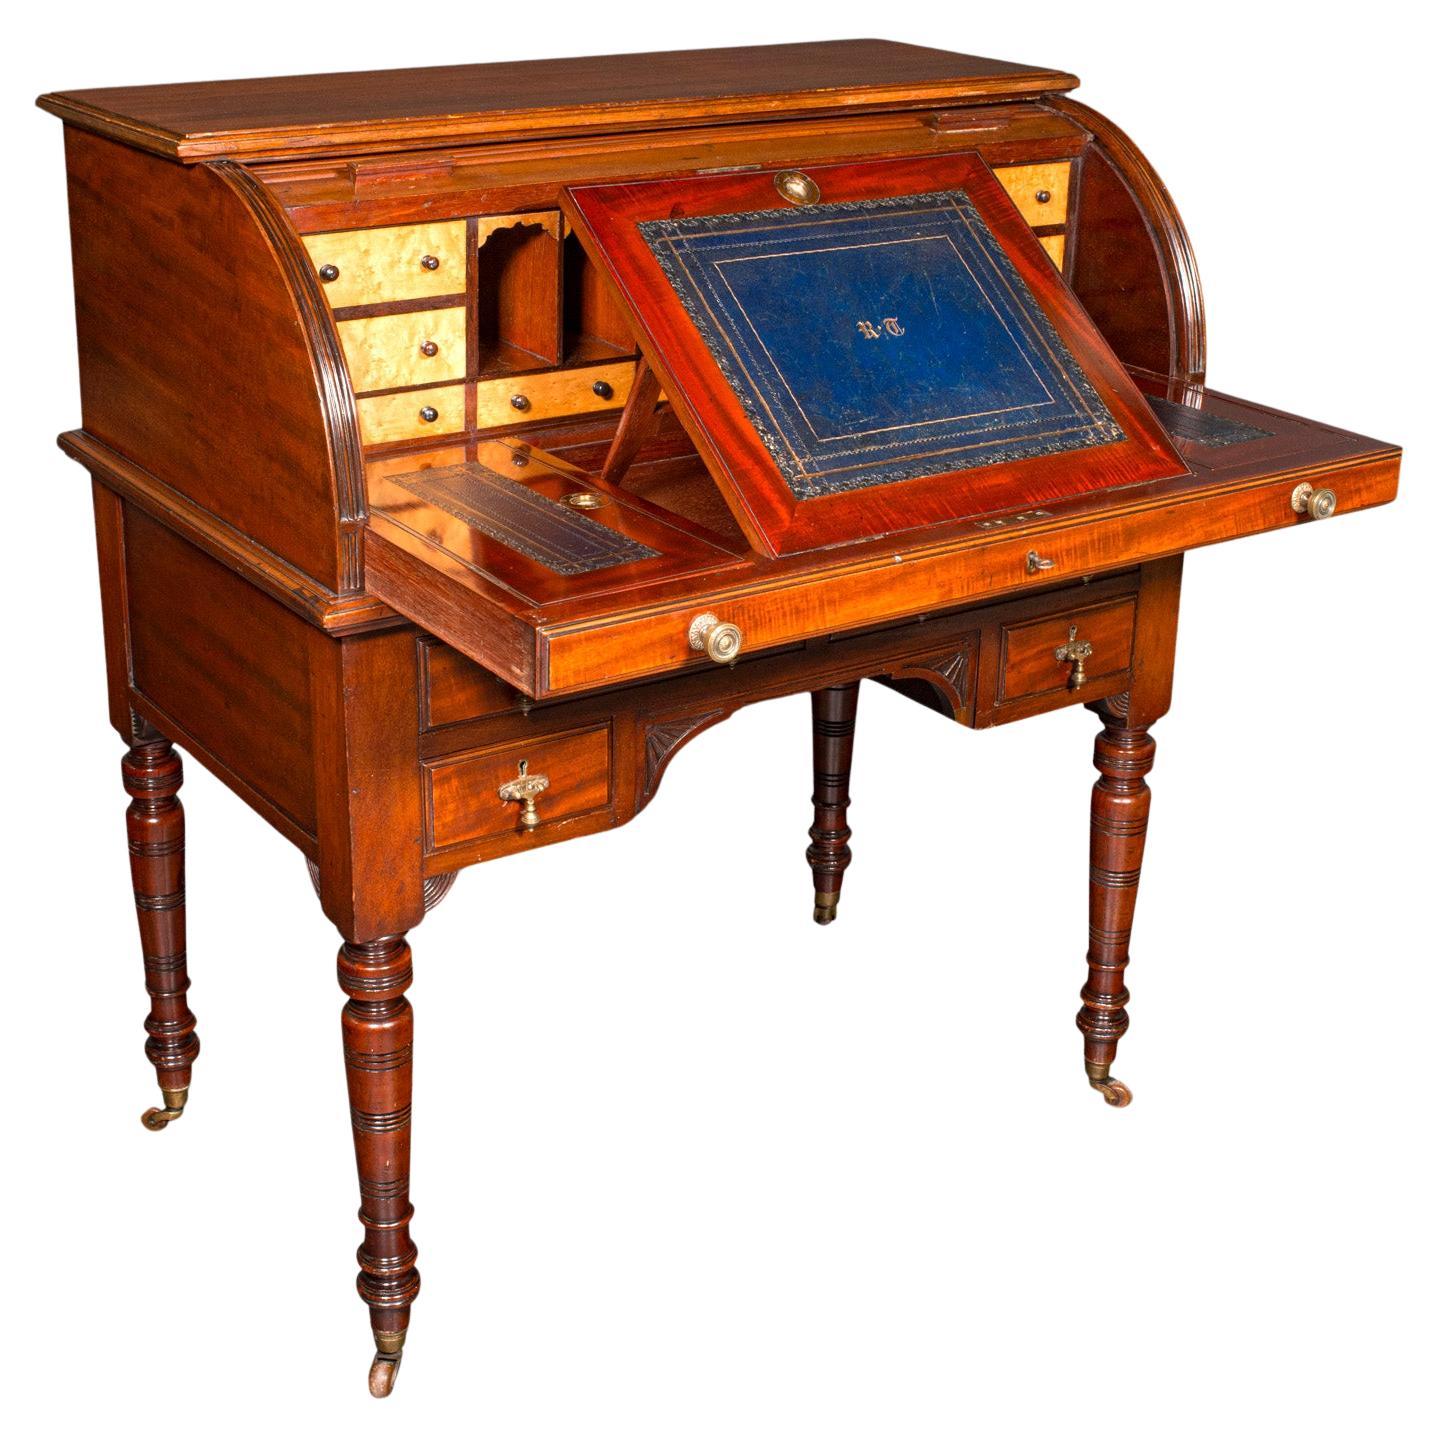 Antique Roll-Top Desk, English, Bureau, Aesthetic Period, Victorian, Circa 1880 For Sale